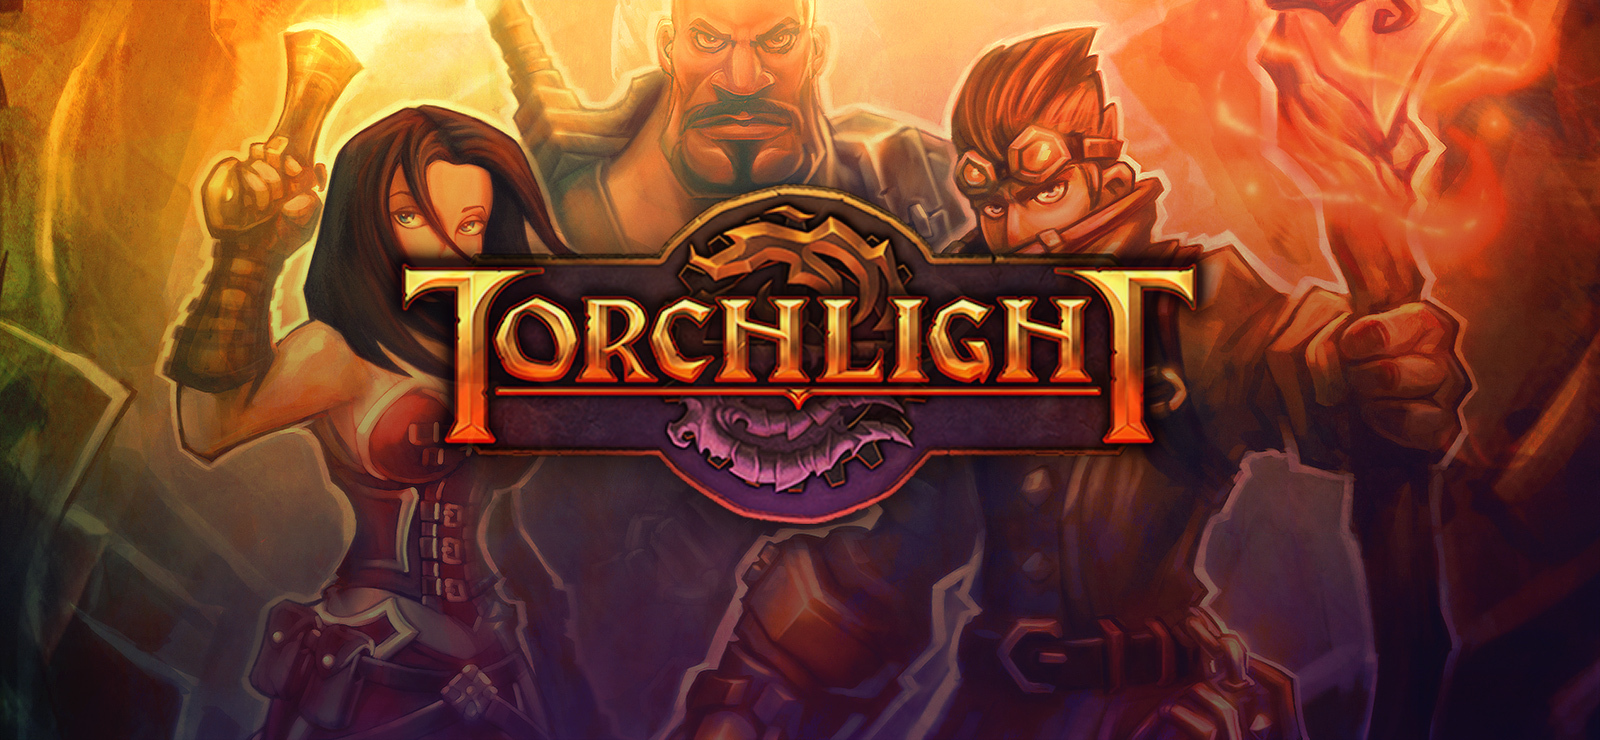 torchlight game information